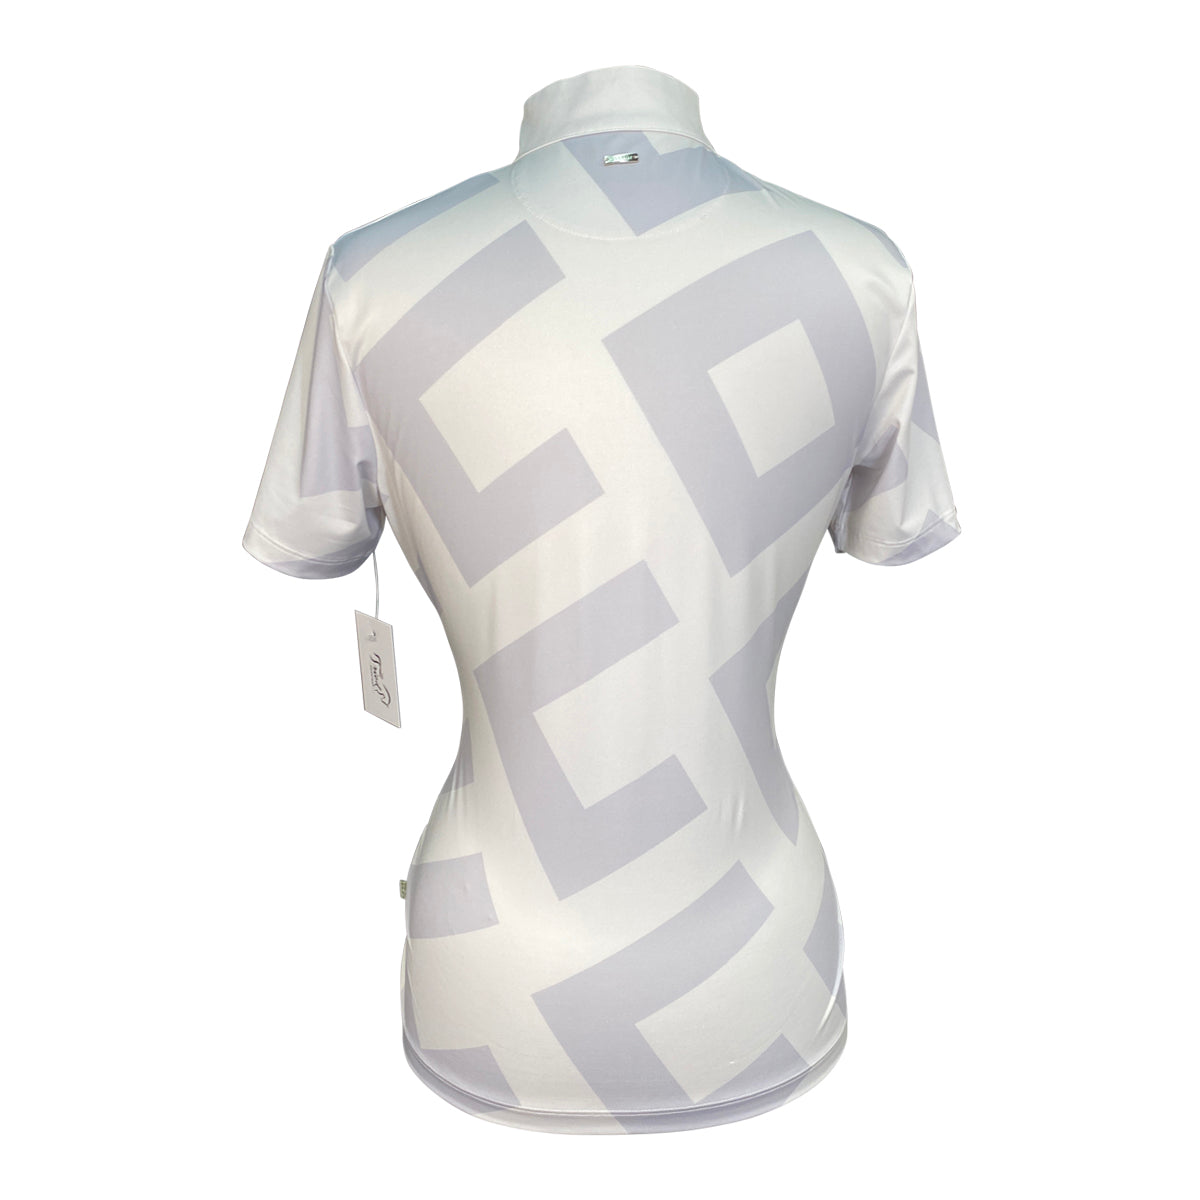 Pikeur 'Marou' Show Shirt in White/Grey Geo